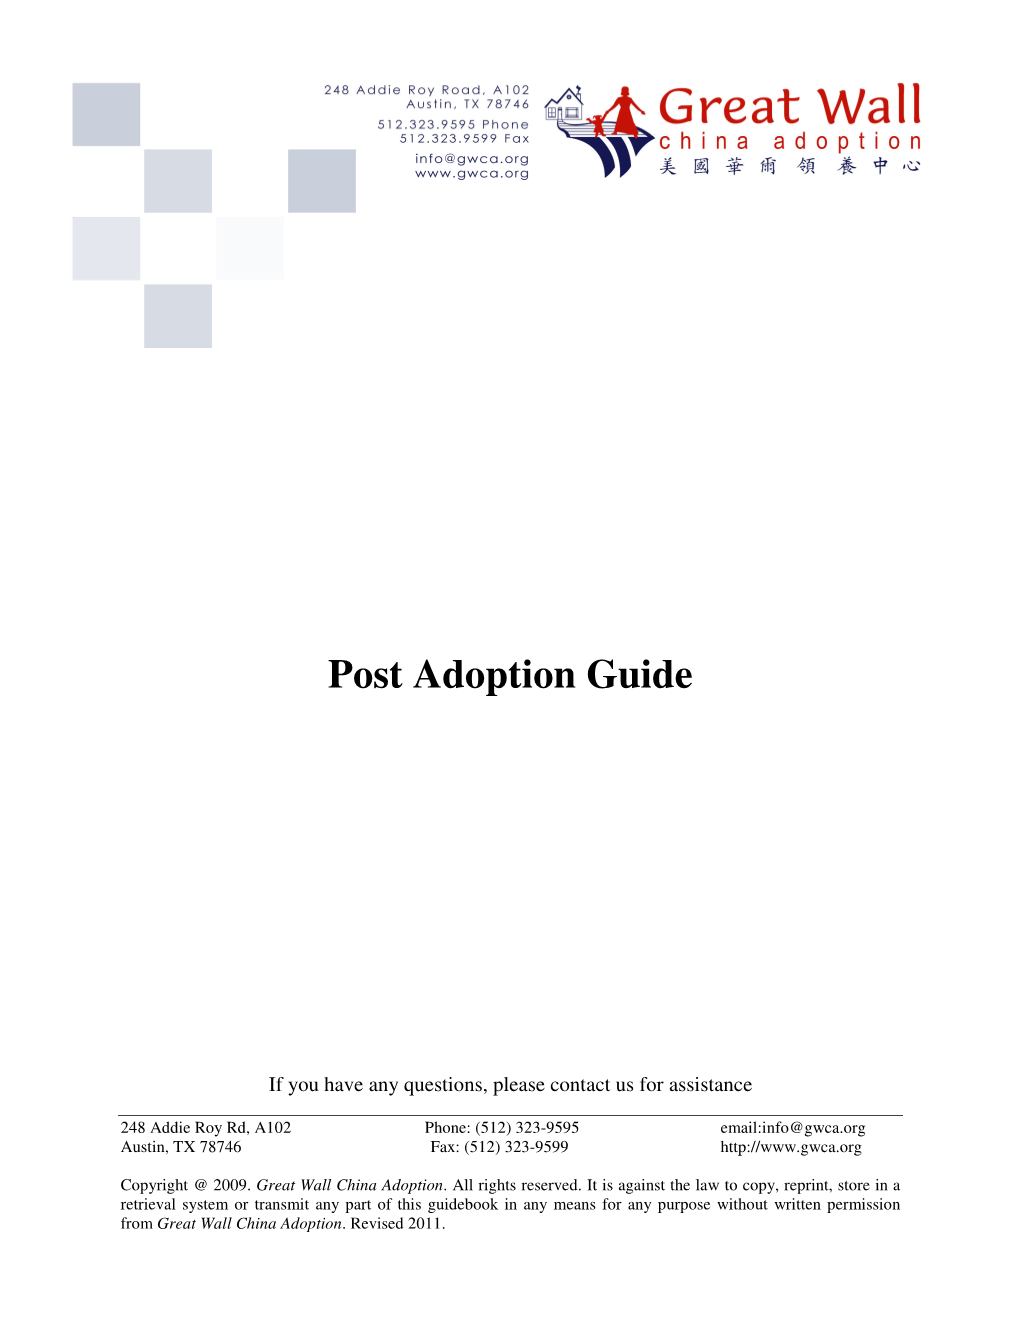 Post Adoption Guide